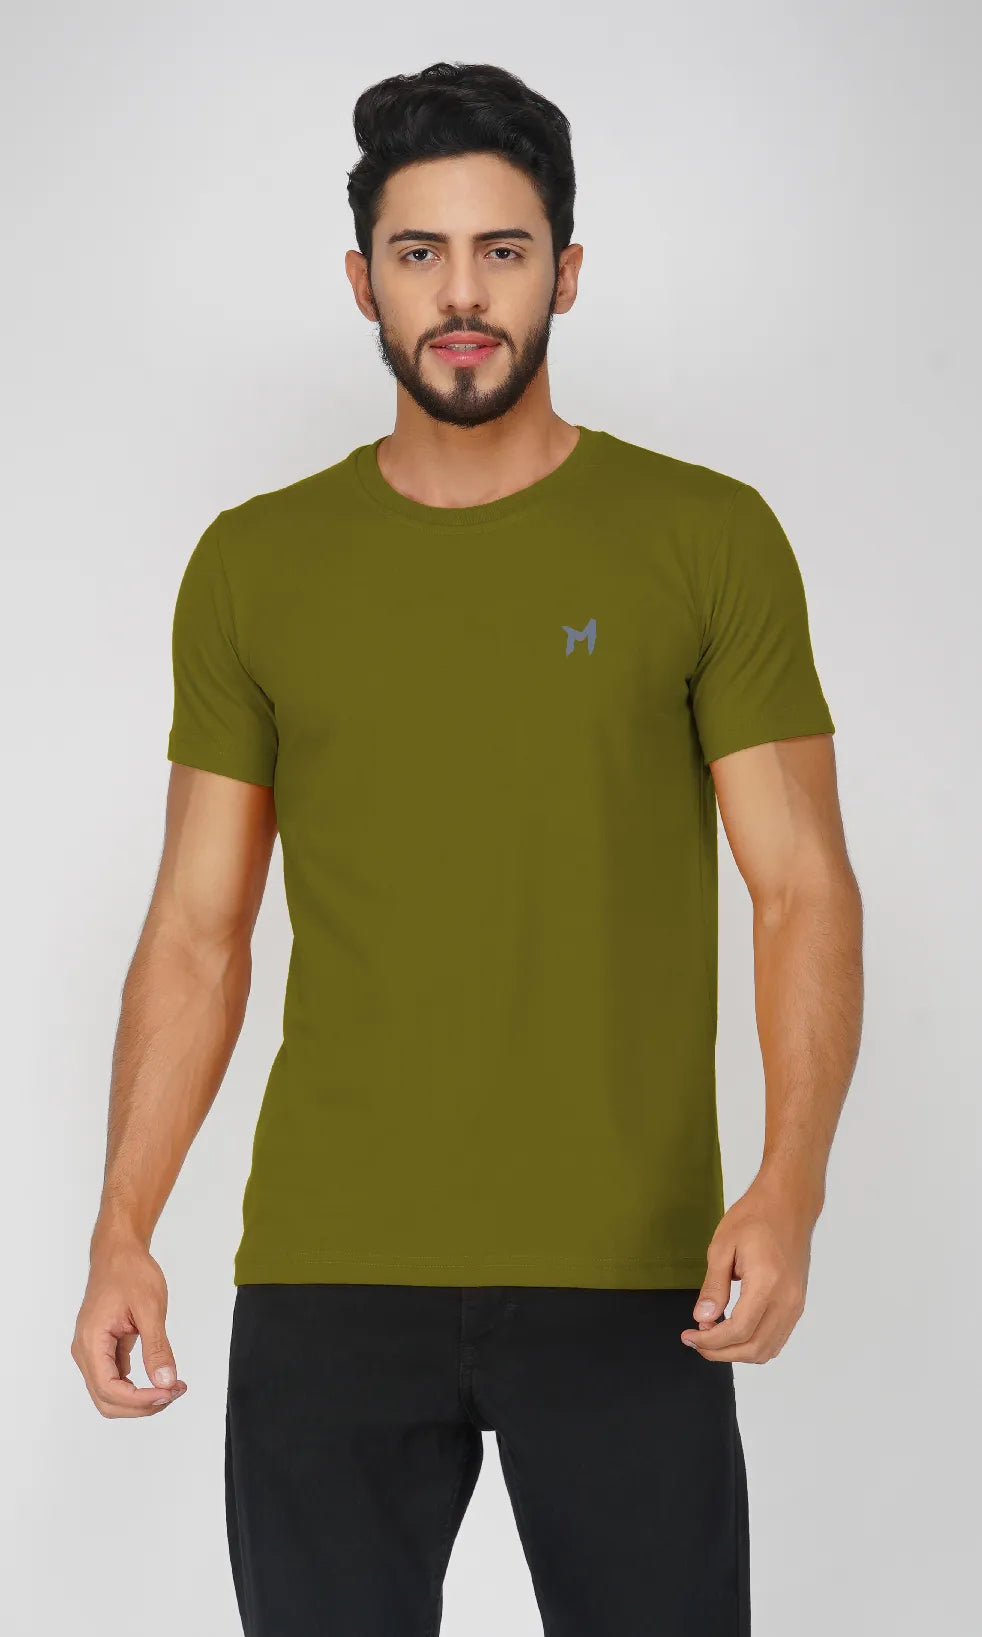 Mebadass Cotton Mens Basic Solid Halfsleeves T-shirts - Olive Green